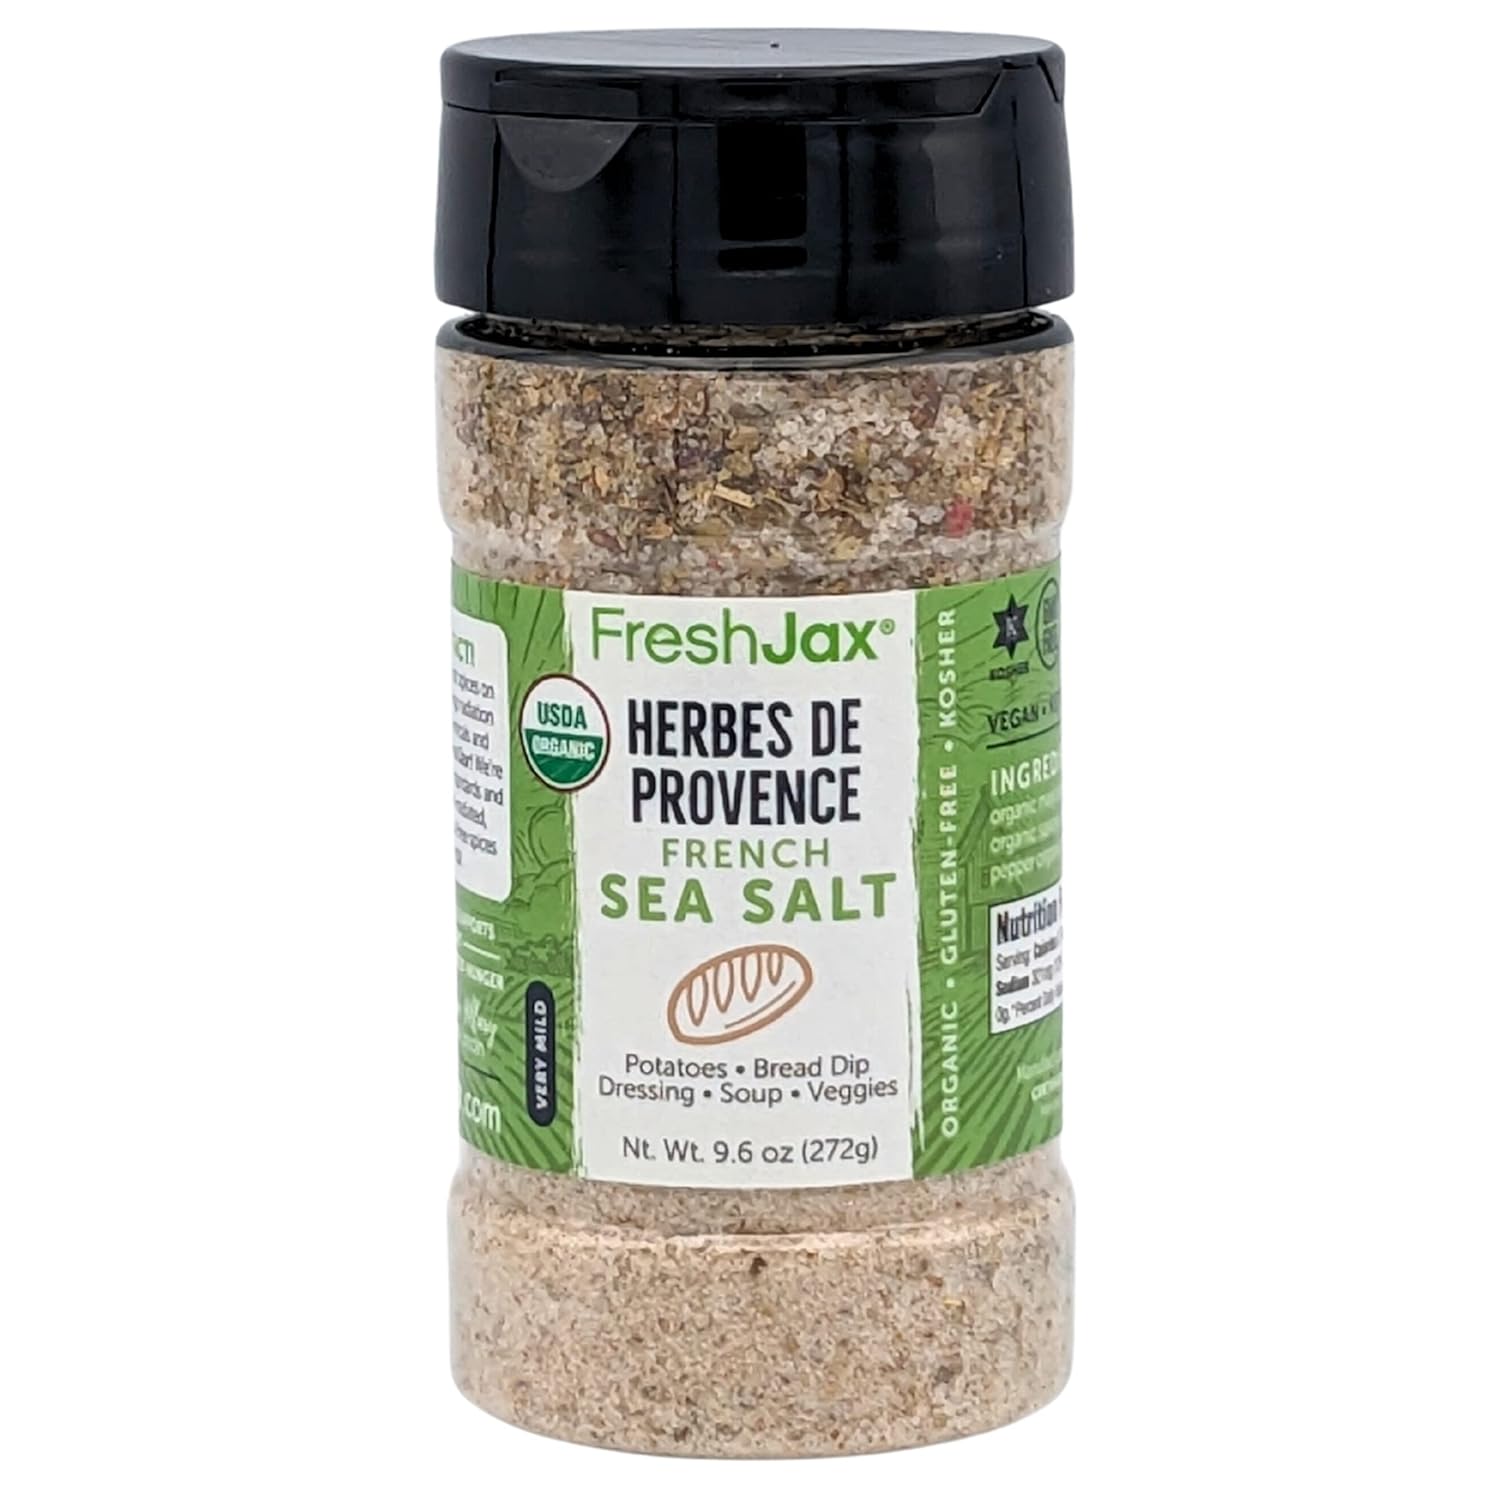 FreshJax Herbes de Provence Sea Salt (9.6 oz Bottle) Non GMO, Gluten Free, Keto, Paleo, No Preservatives Herbes De Provence Seasoning, Seasoned Sea Salt | Handcrafted in Jacksonville